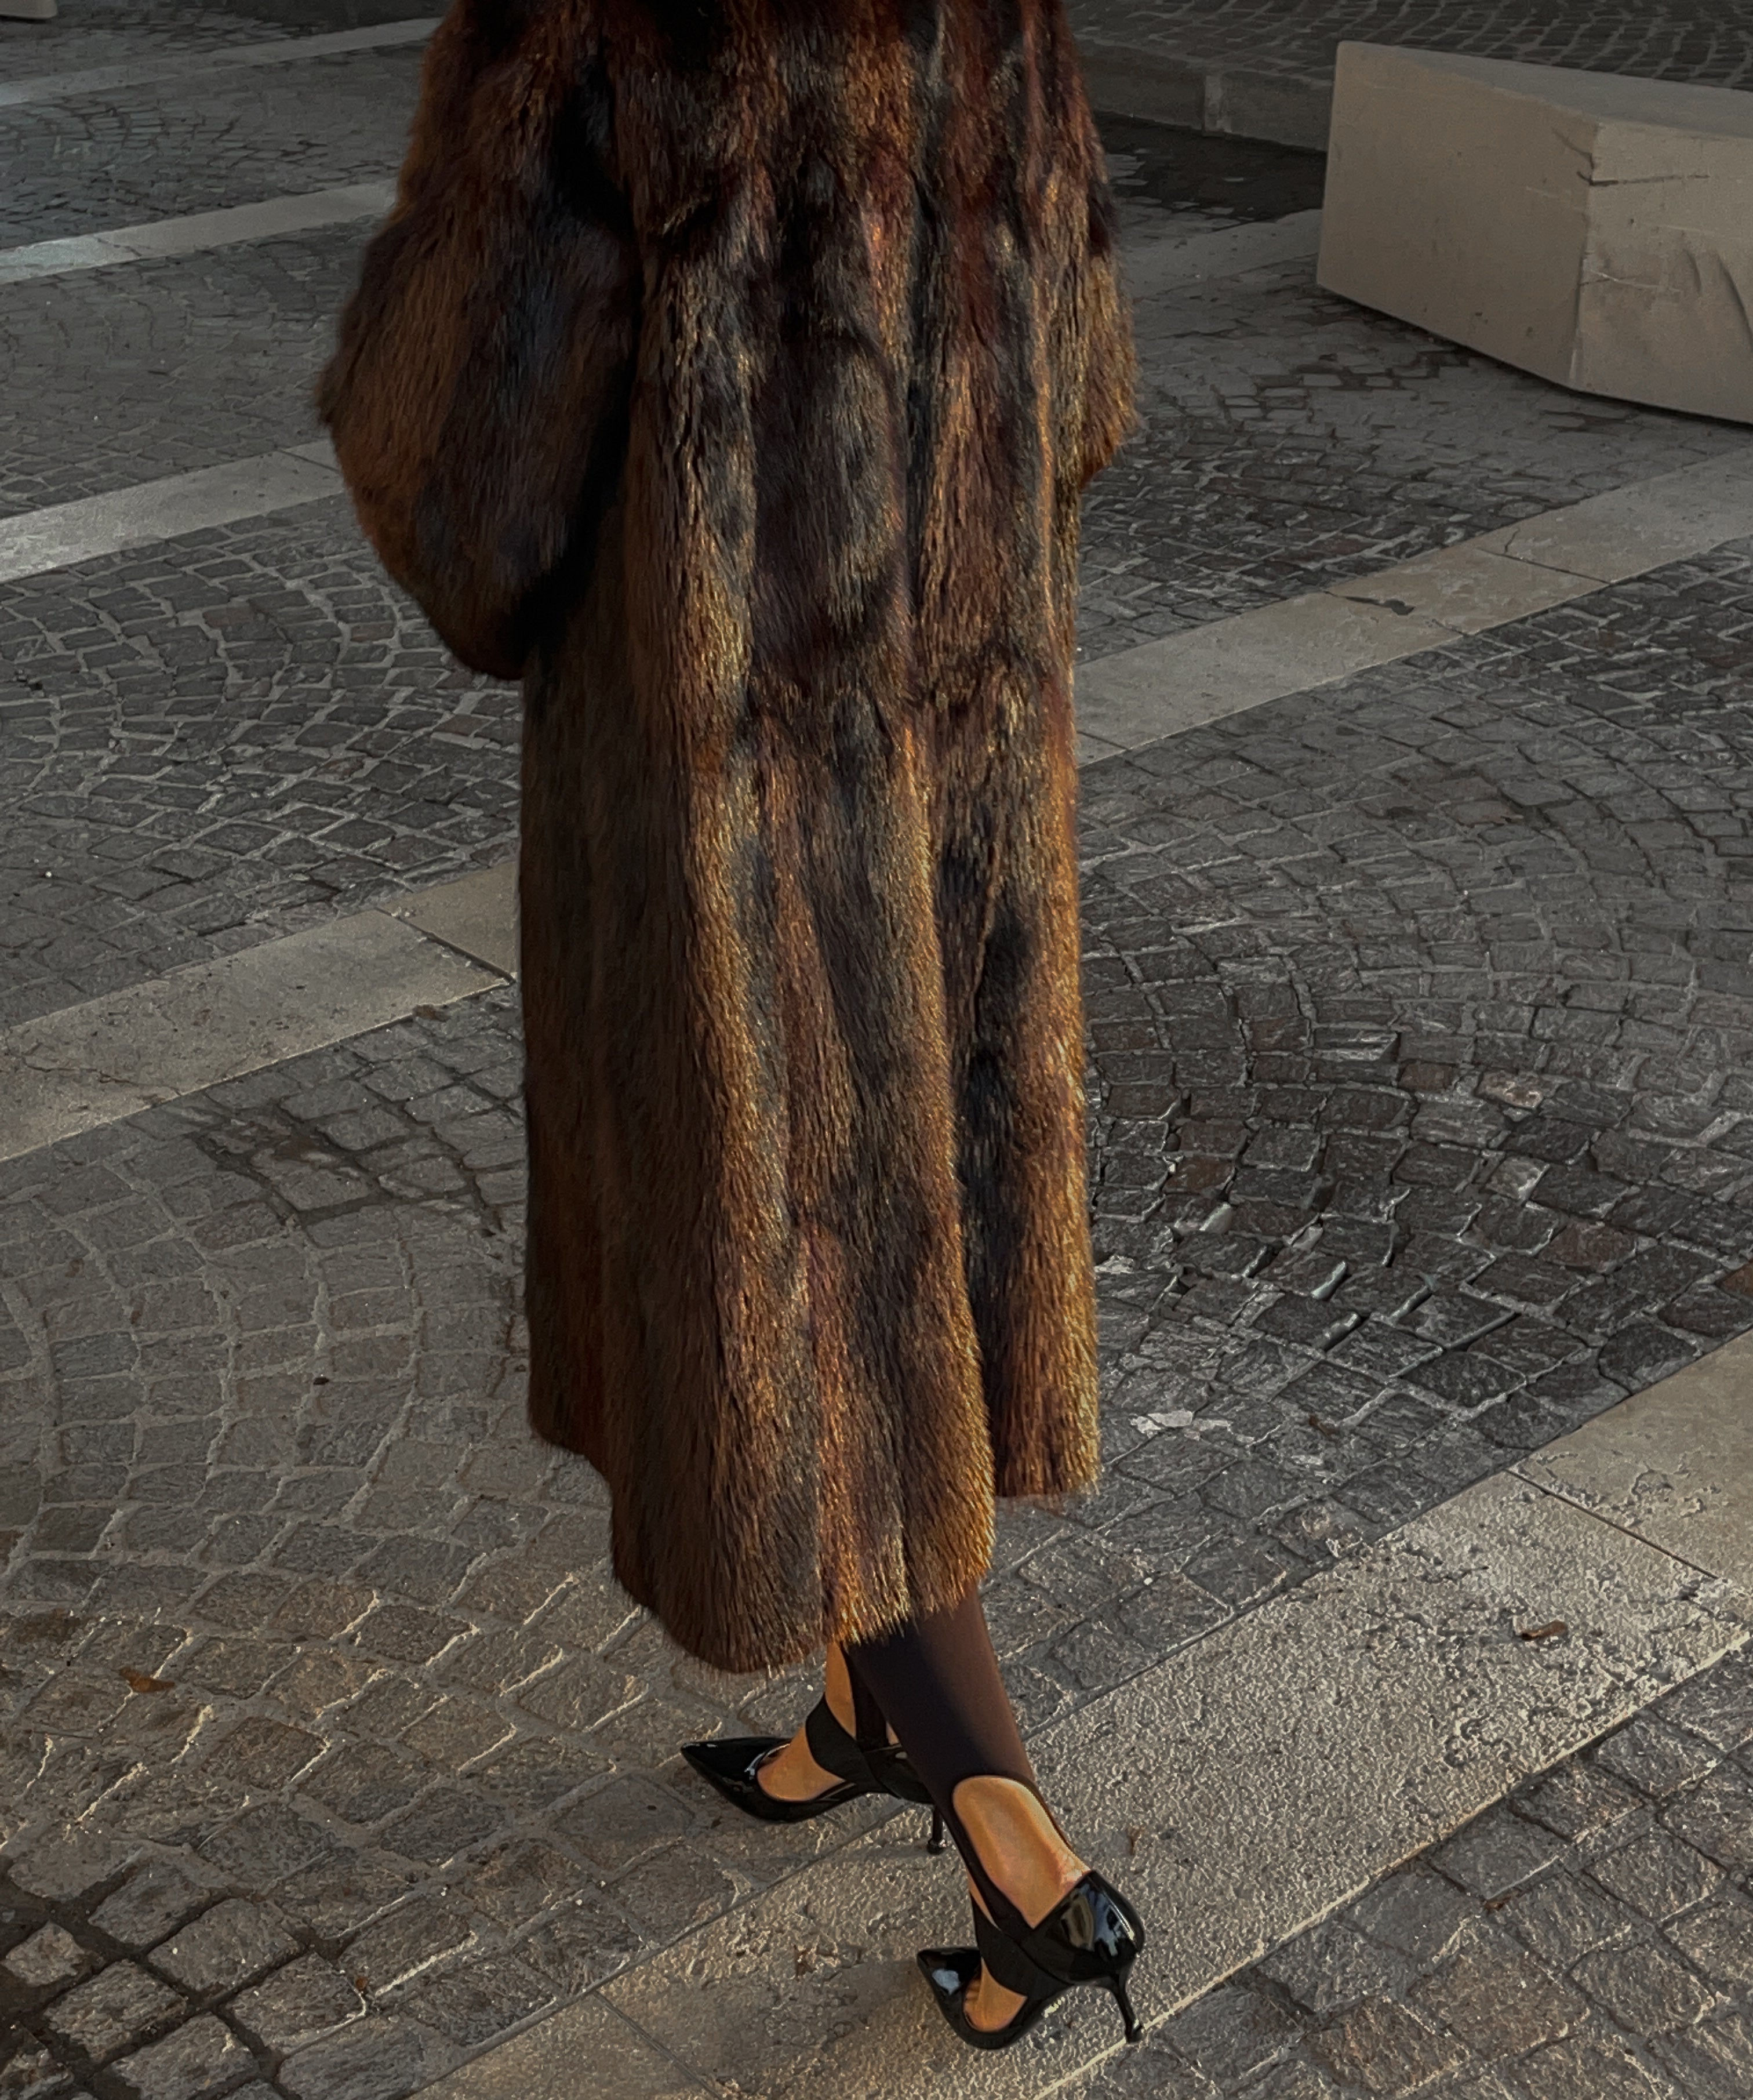 Vintage fur